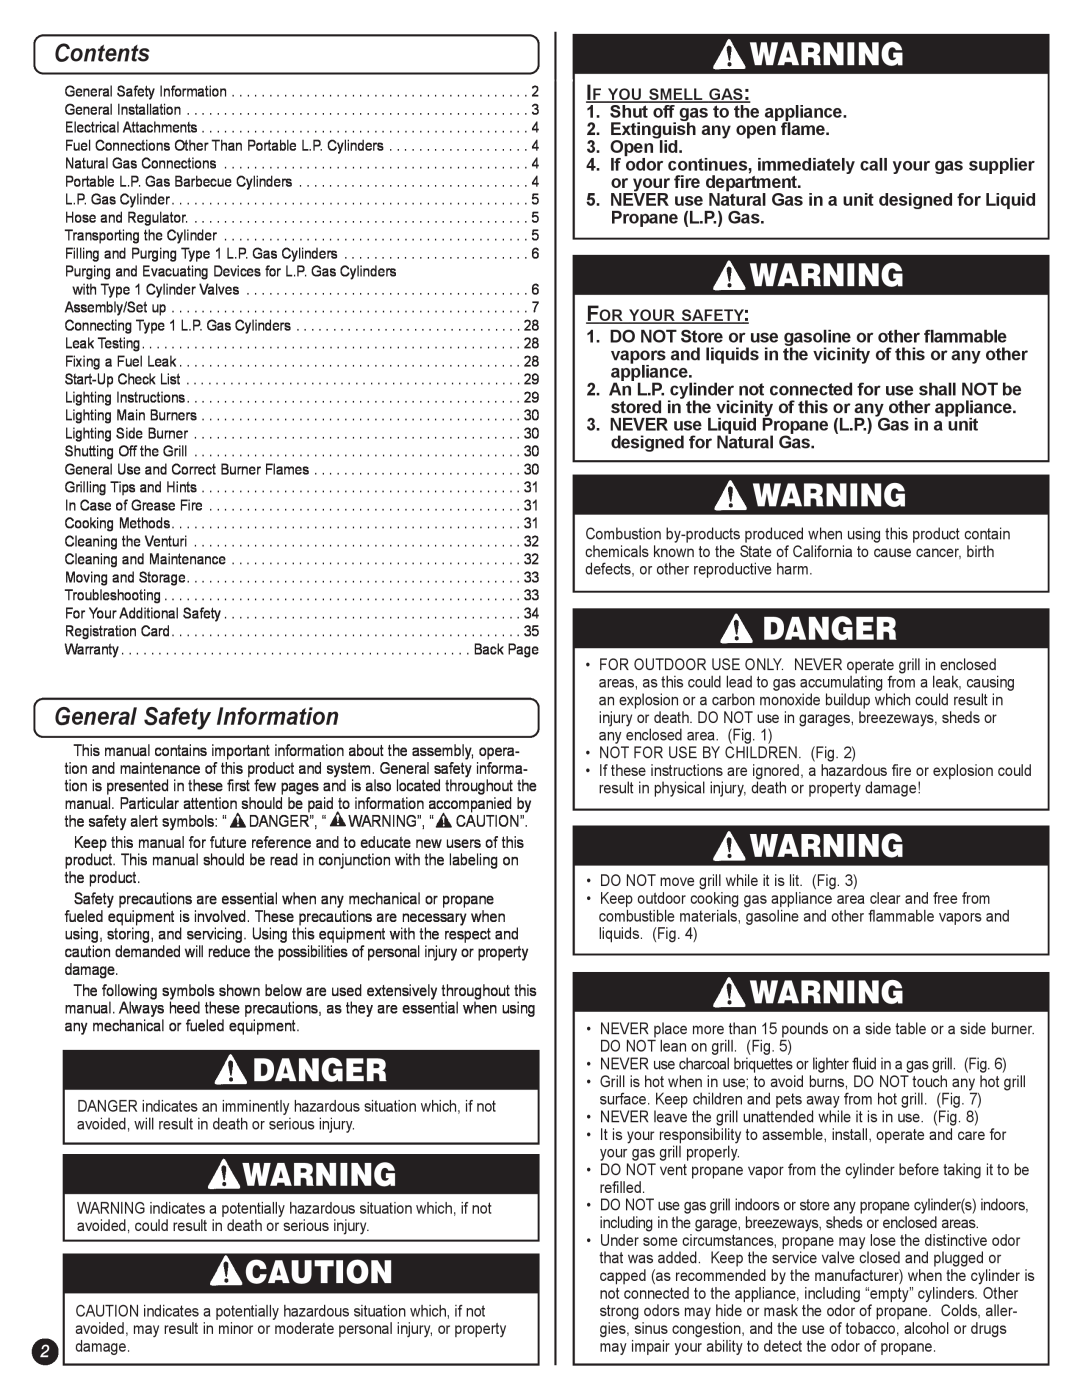 Coleman 5400 LP manual Danger, Contents, General Safety Information 